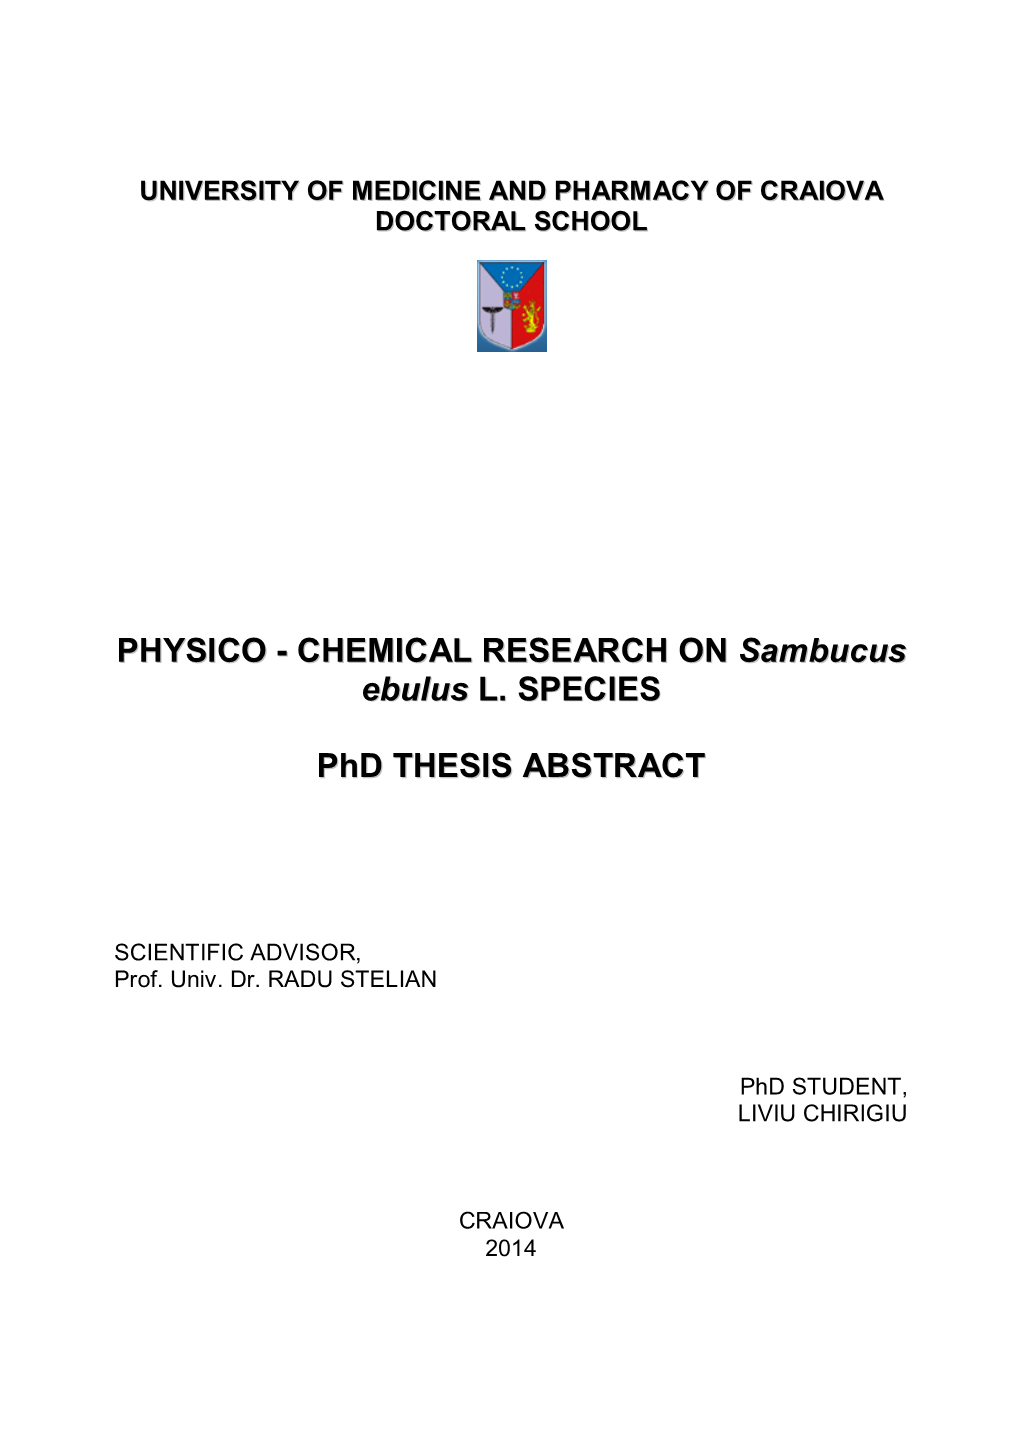 PHYSICO - CHEMICAL RESEARCH on Sambucus Ebulus L